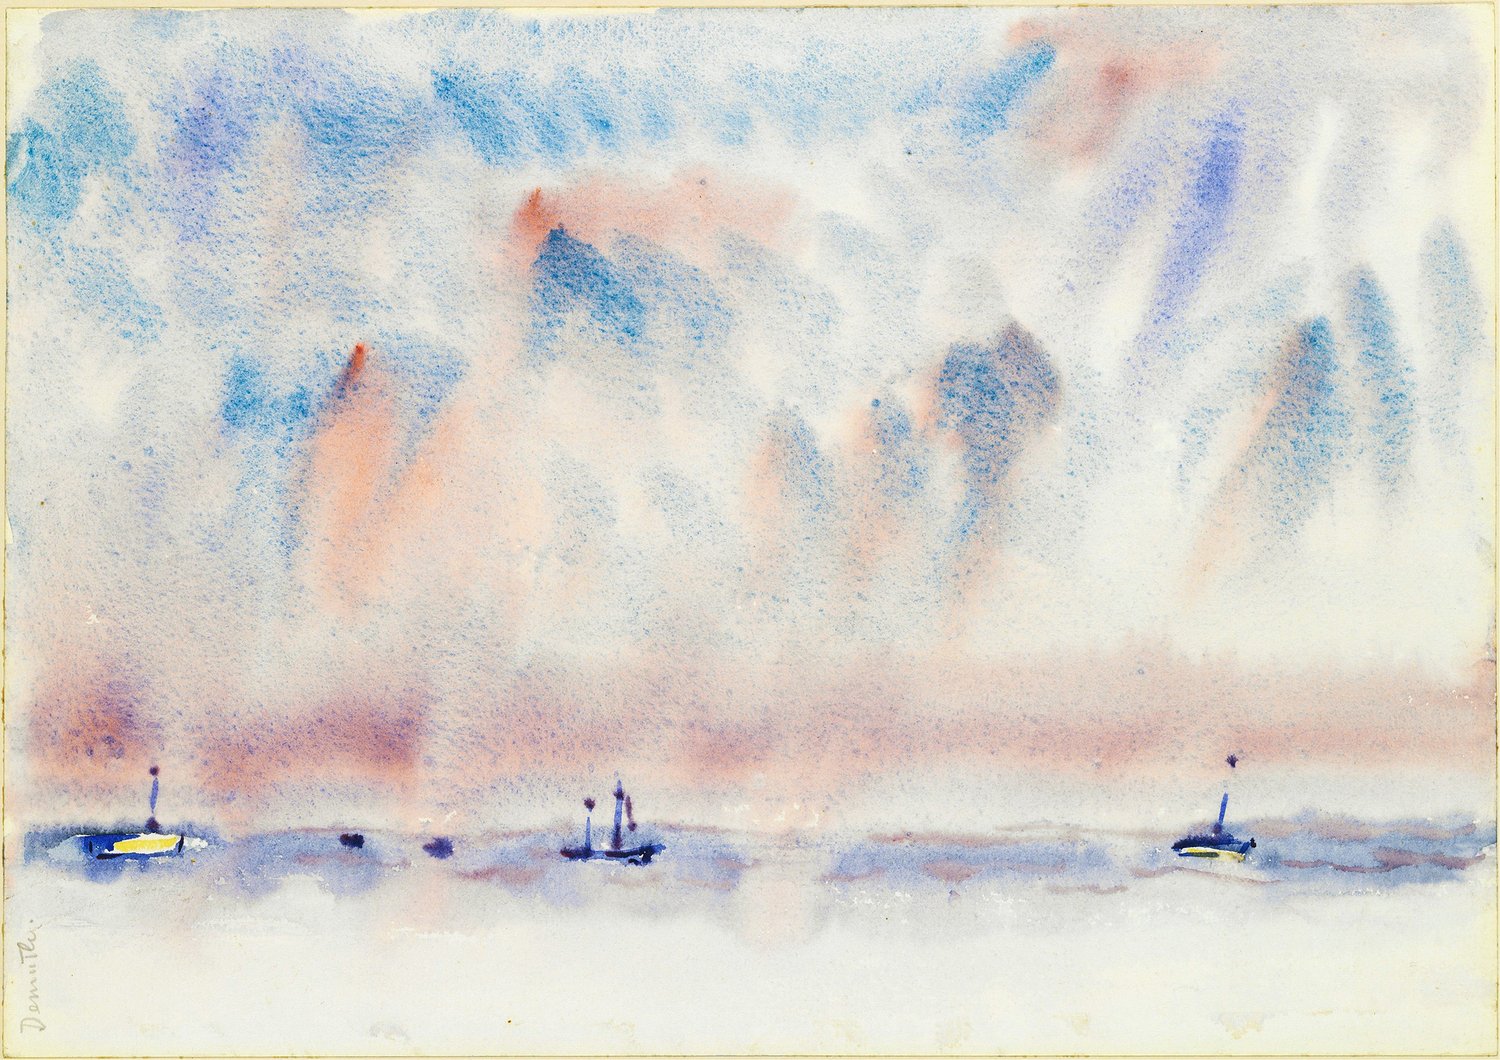 Bermuda Sky and Sea with Boats (circa 1917)